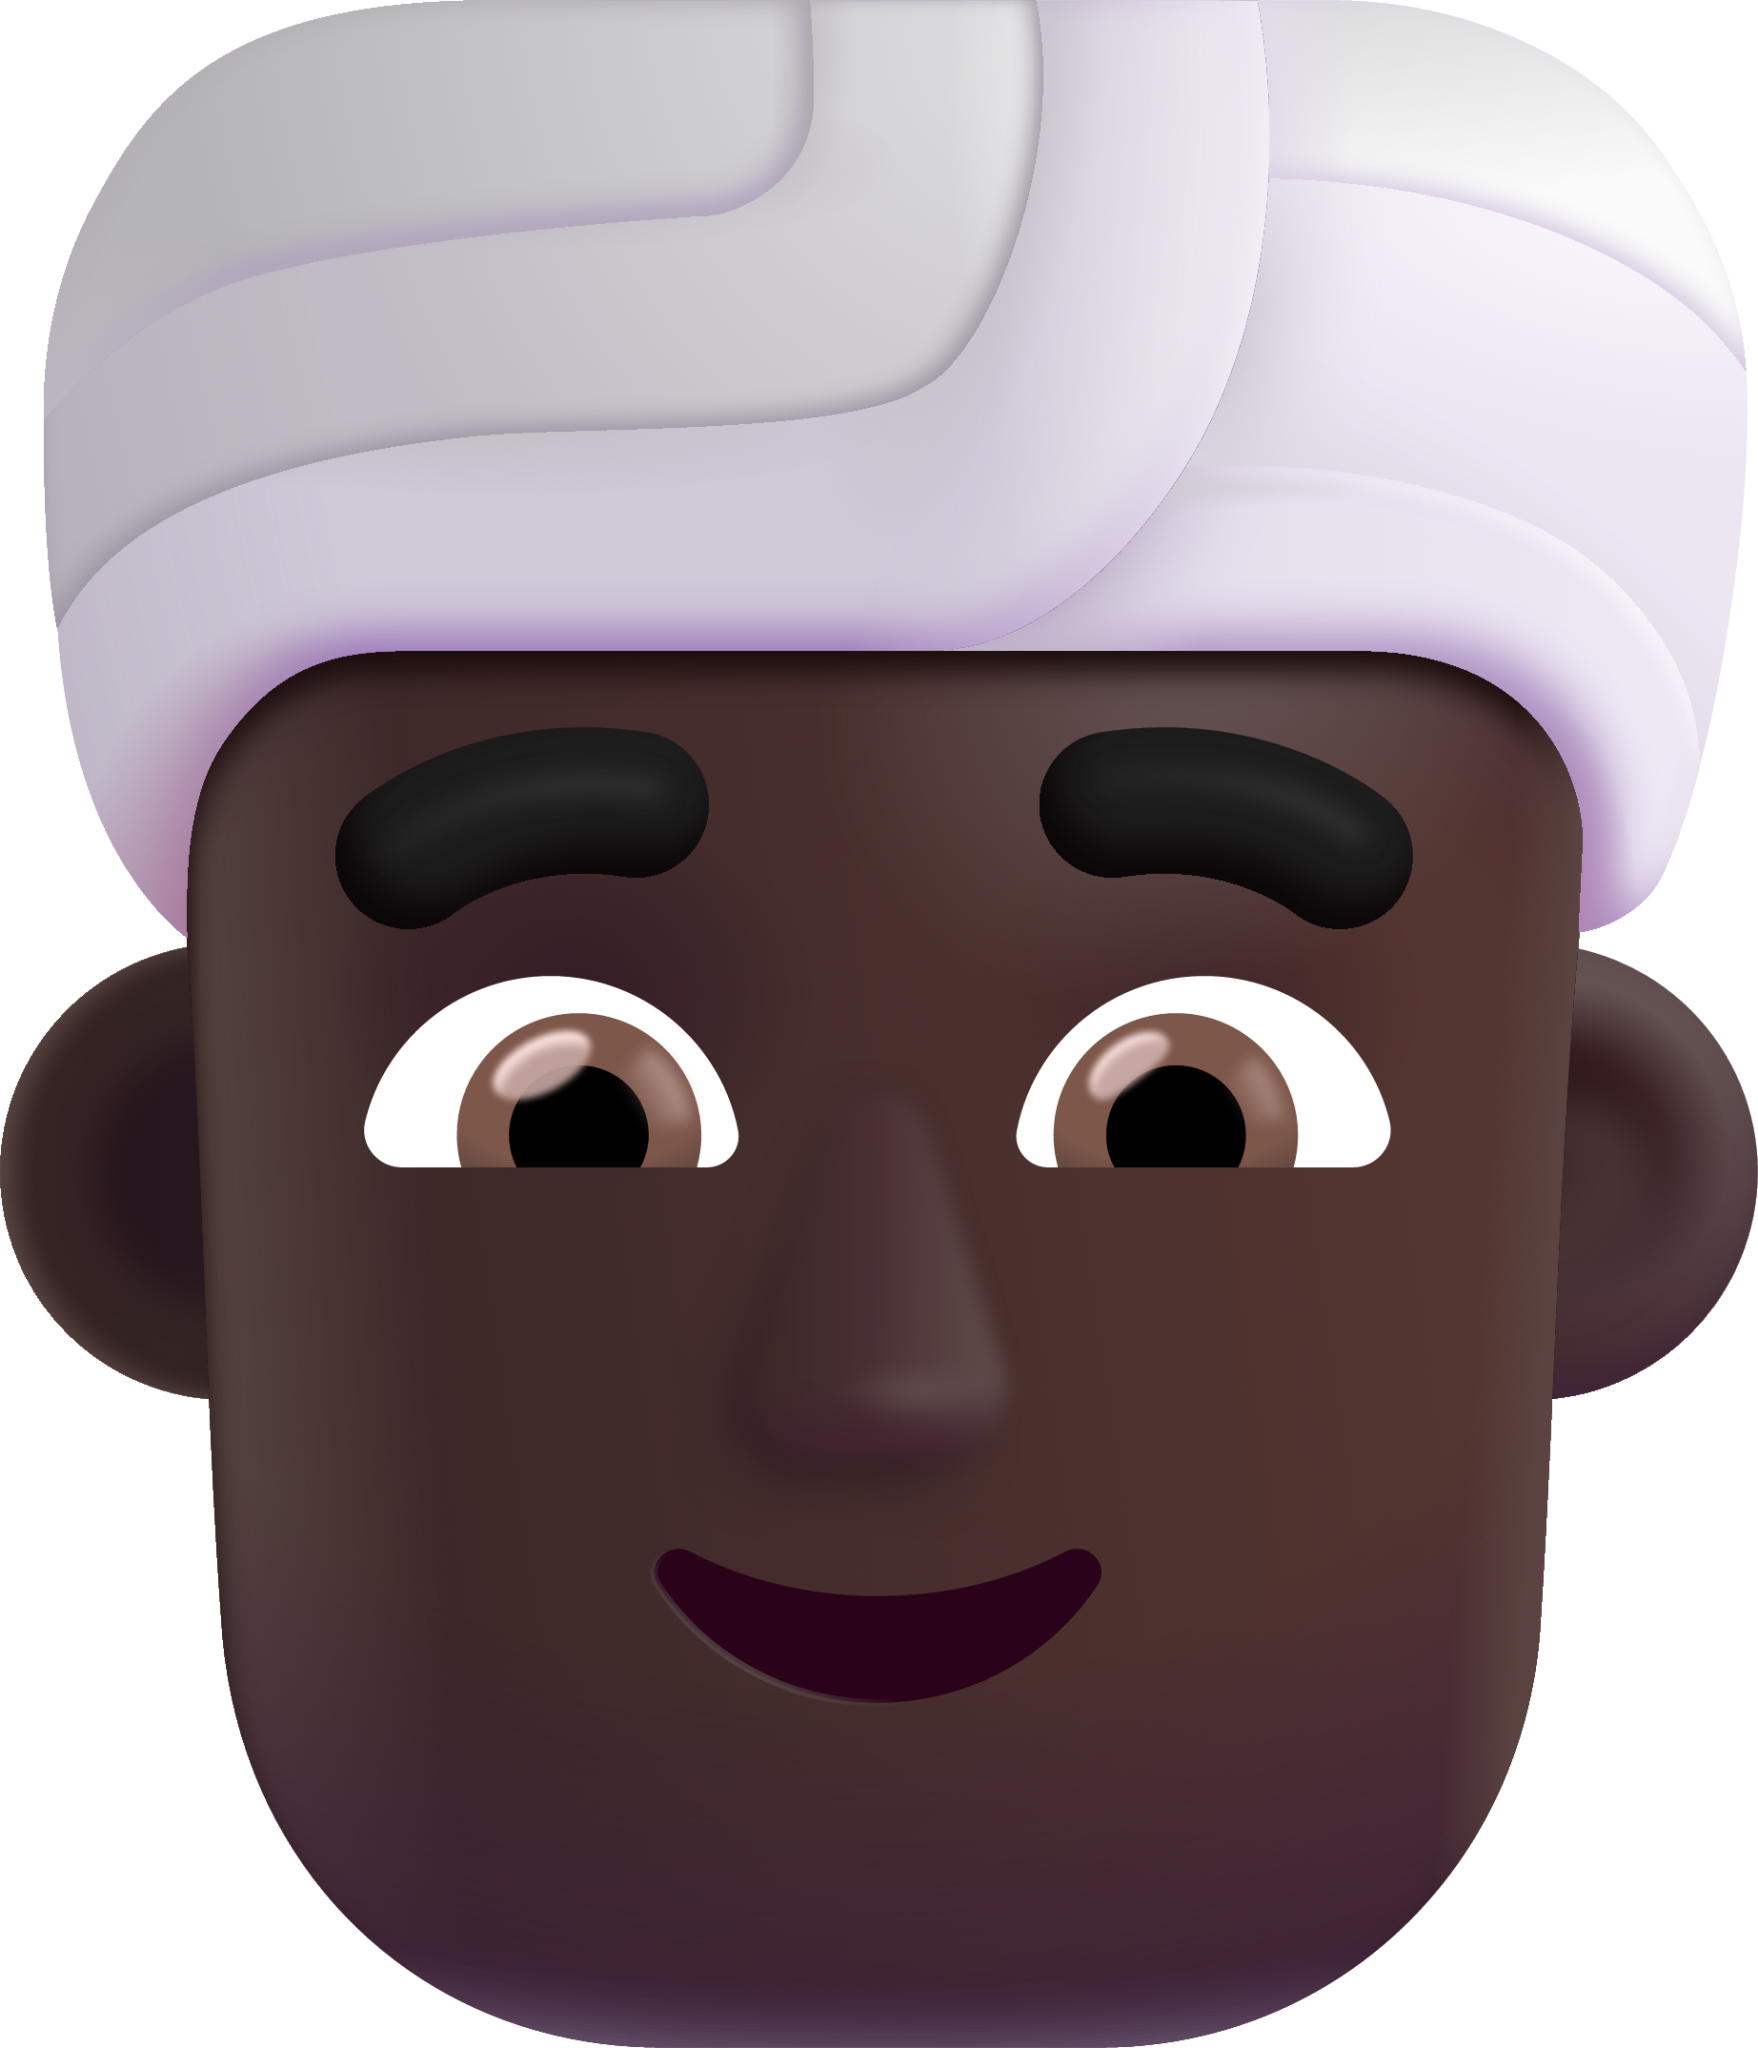 man wearing turban dark emoji